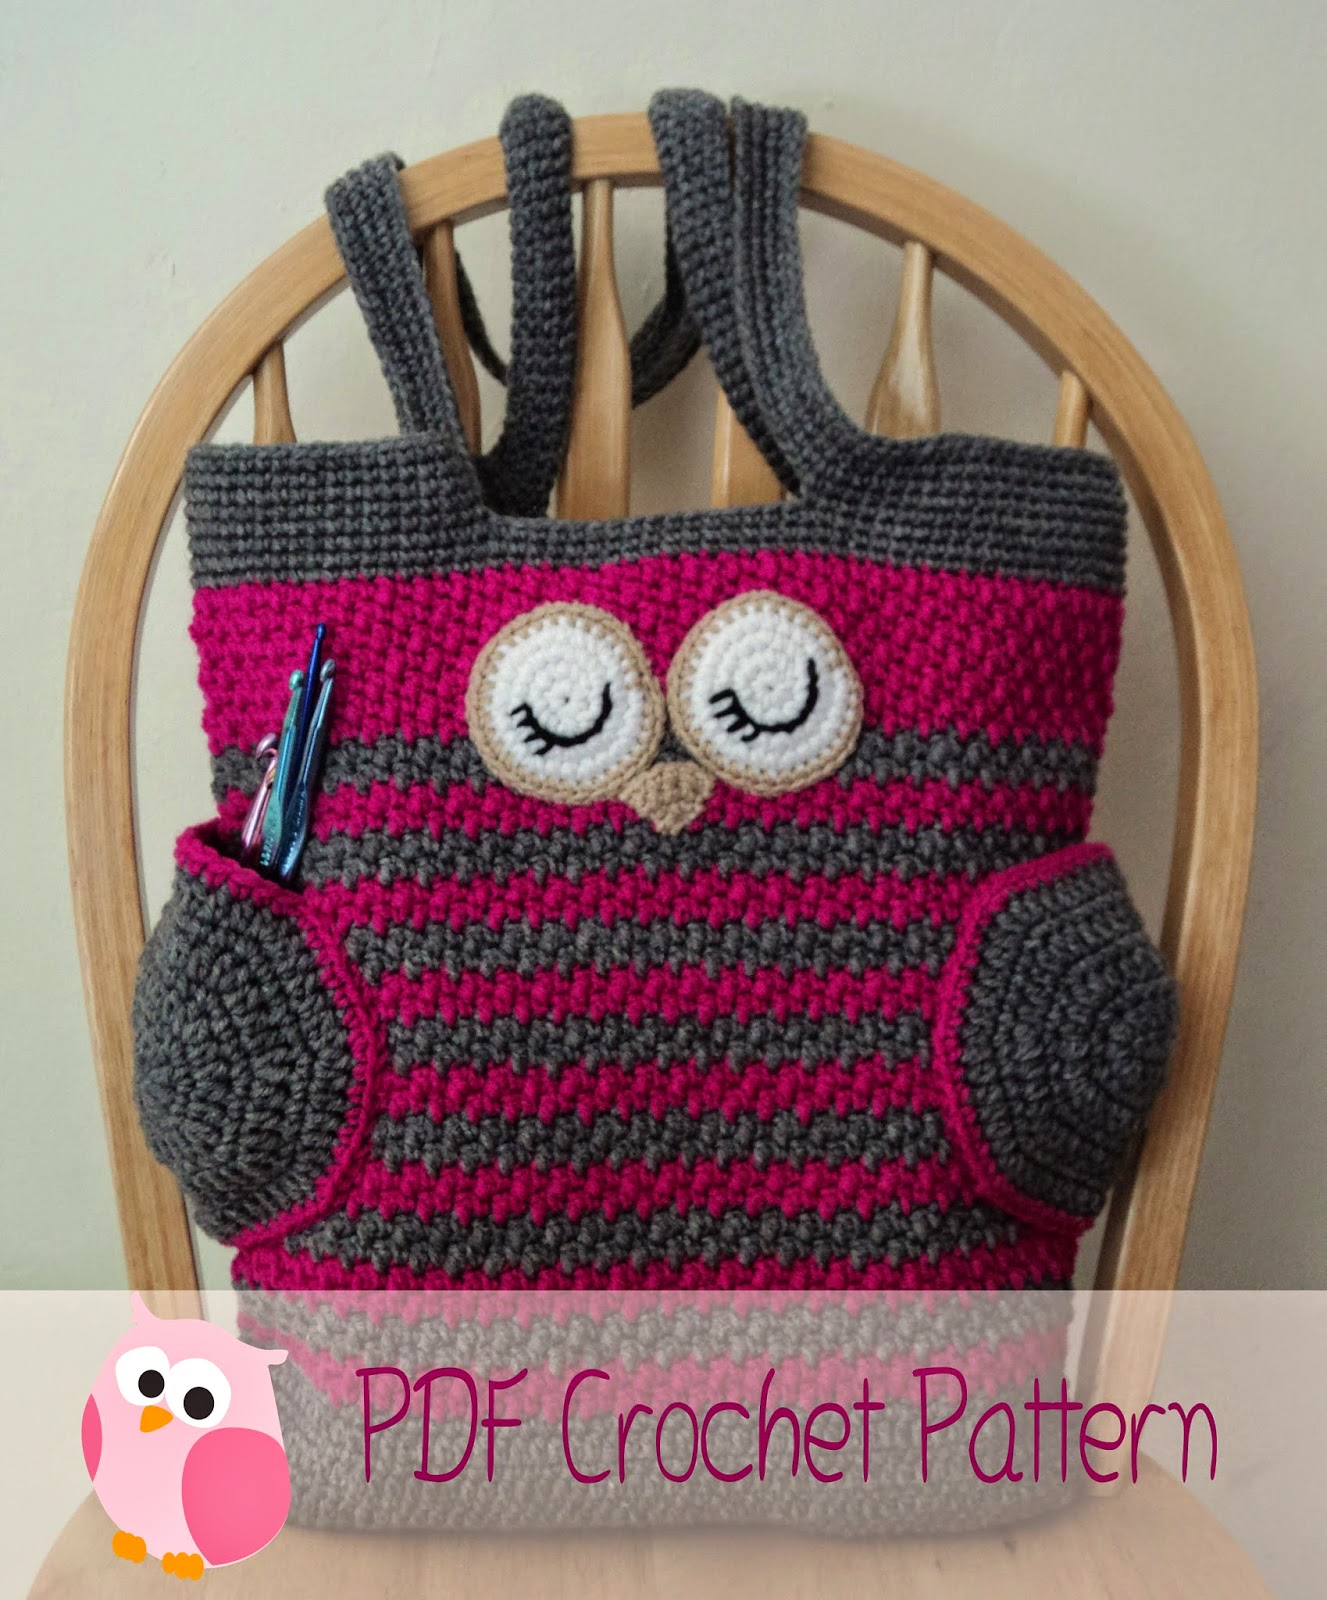 Crochet Hobo Bag Free Pattern 29 Crochet Bag Patterns Guide Patterns